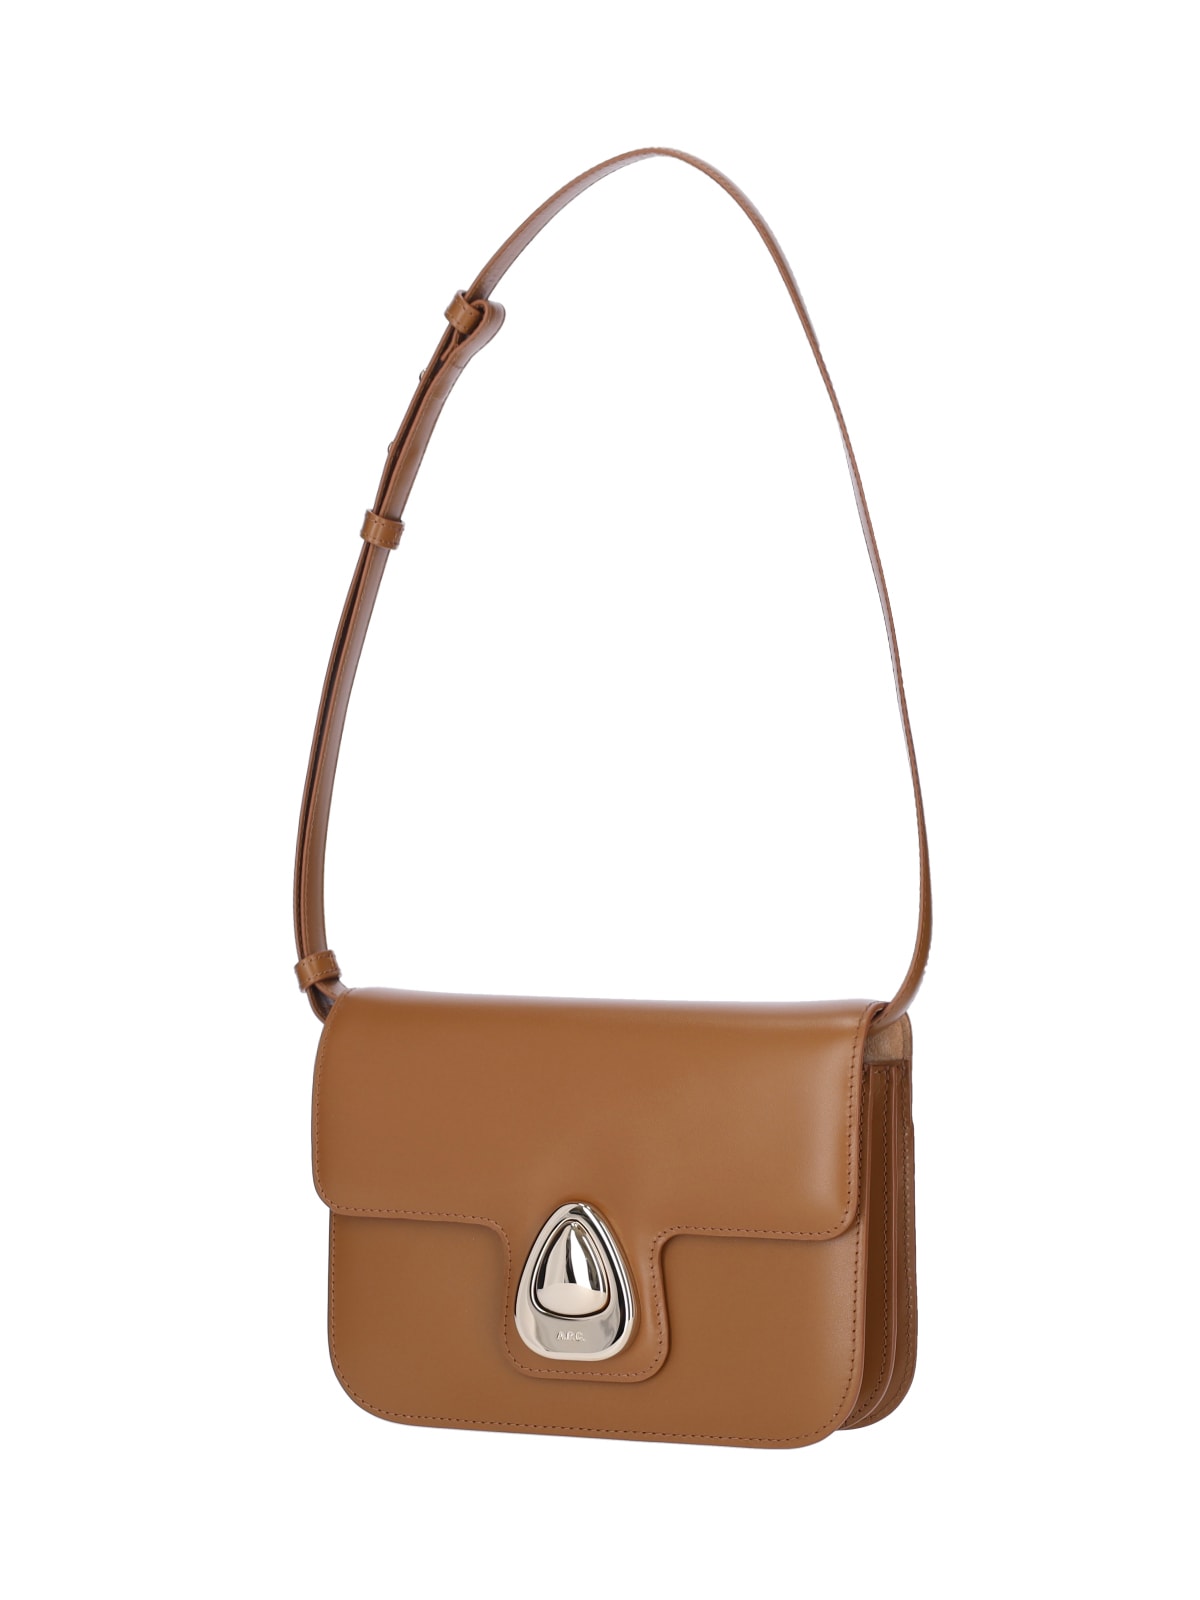 Shop Apc Small Shoulder Bag Astra In Brown